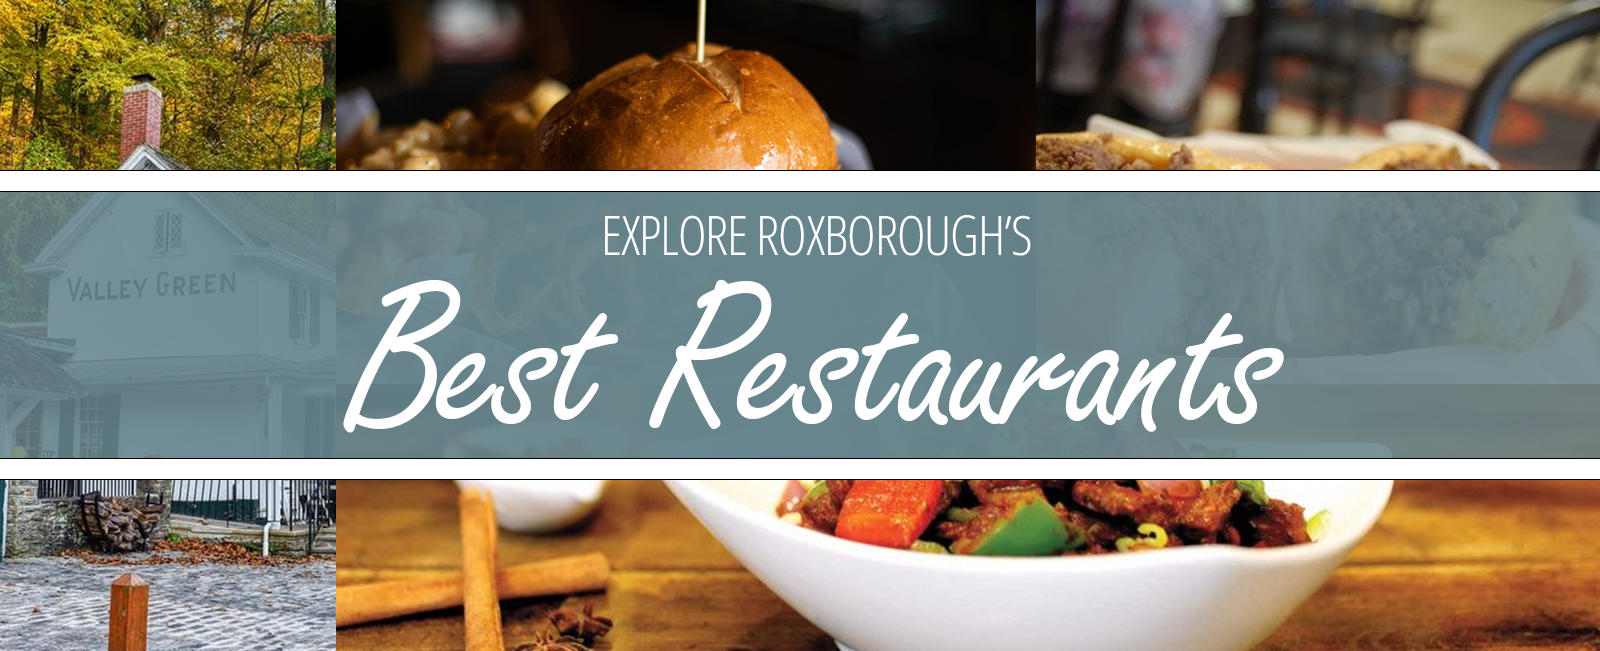 Best_restaurants_in_roxborough